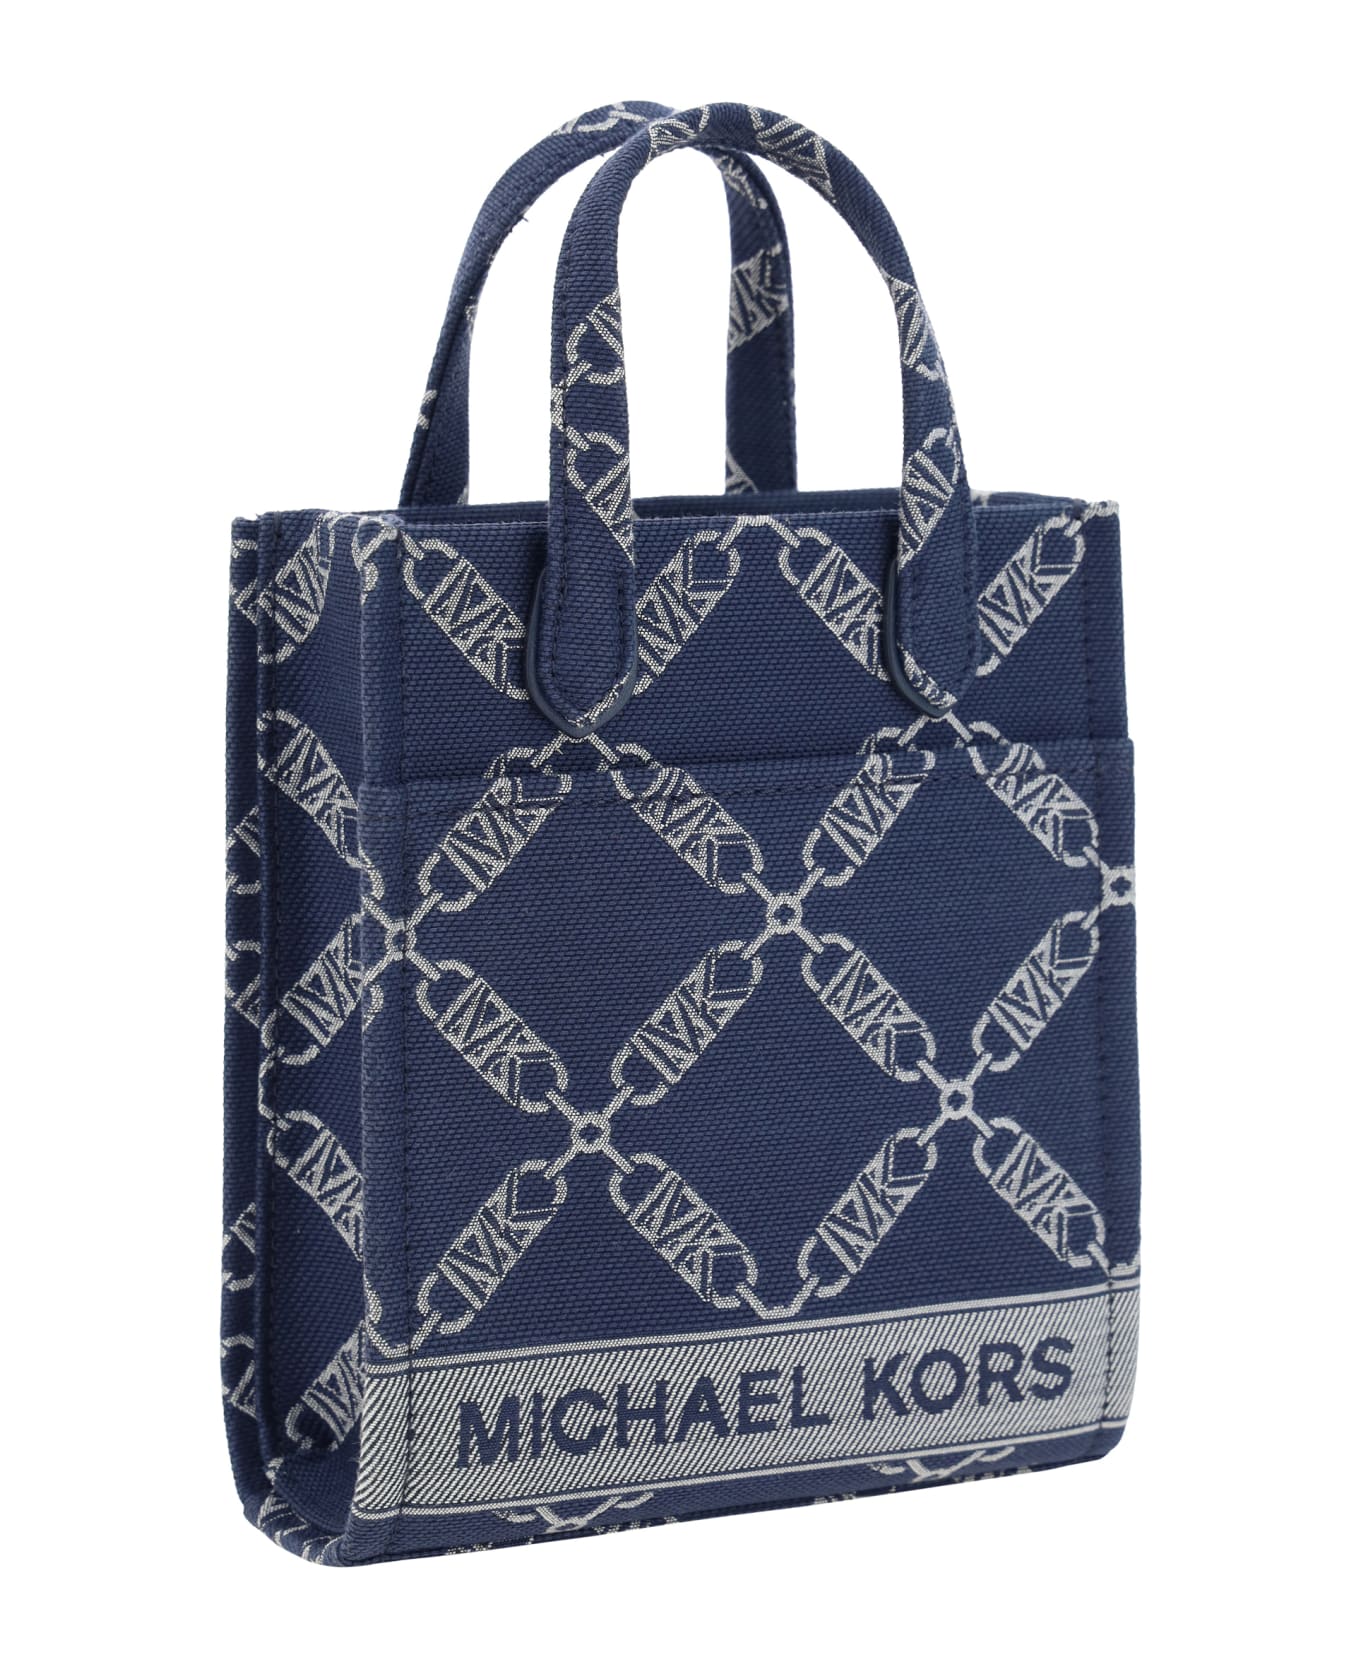 Michael Kors Gigi Tote Bag - Blue